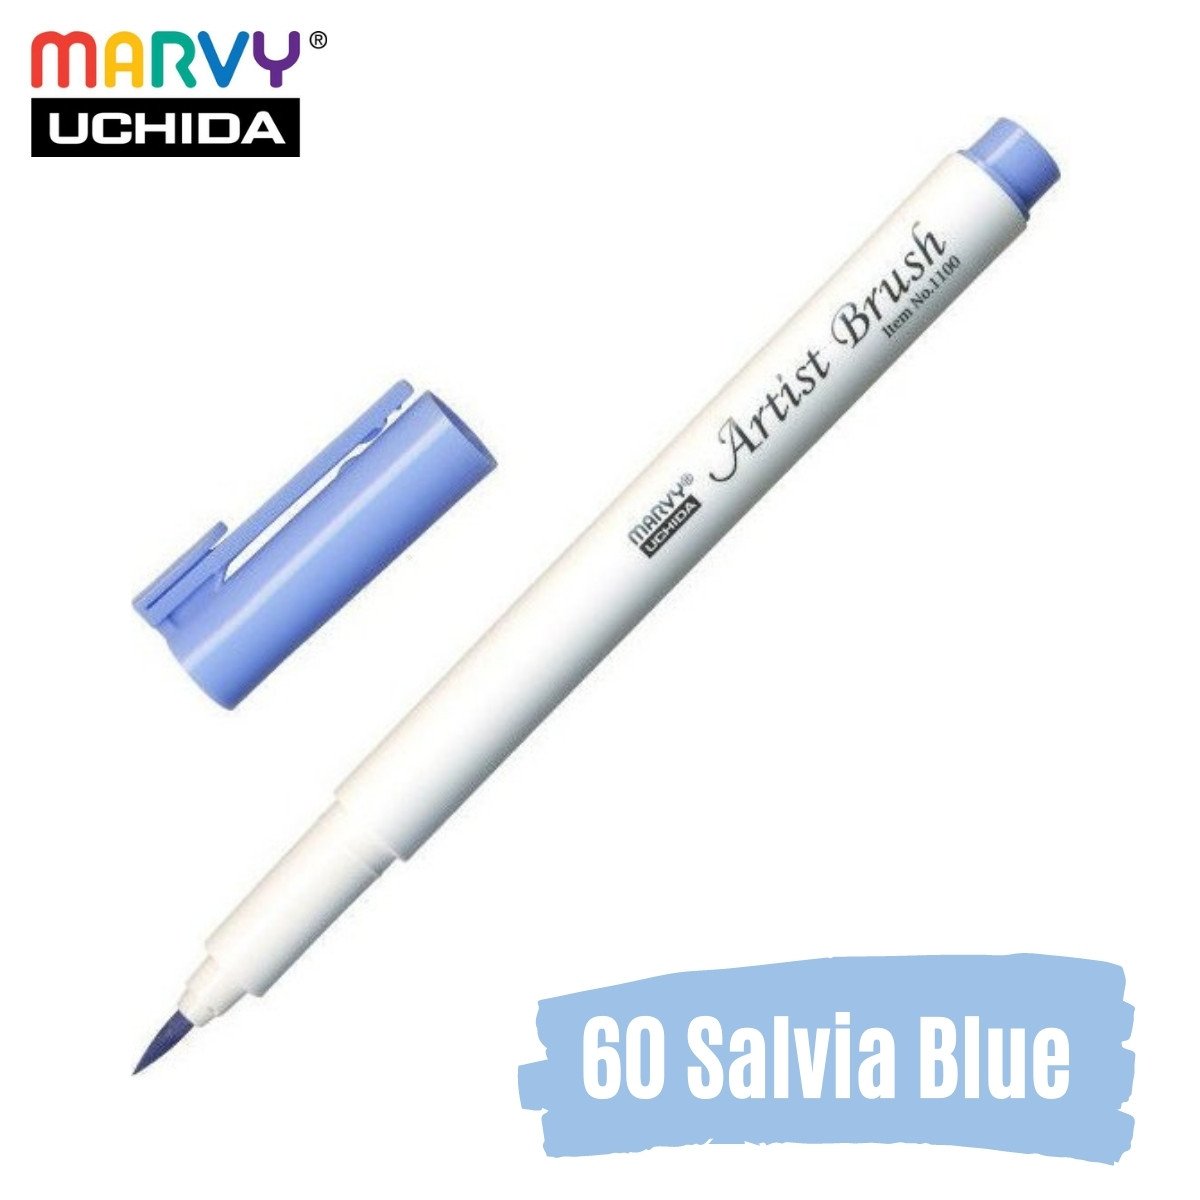 Marvy Artist Brush Pen 1100 Firça Uçlu Kalem 60 Salvia Blue